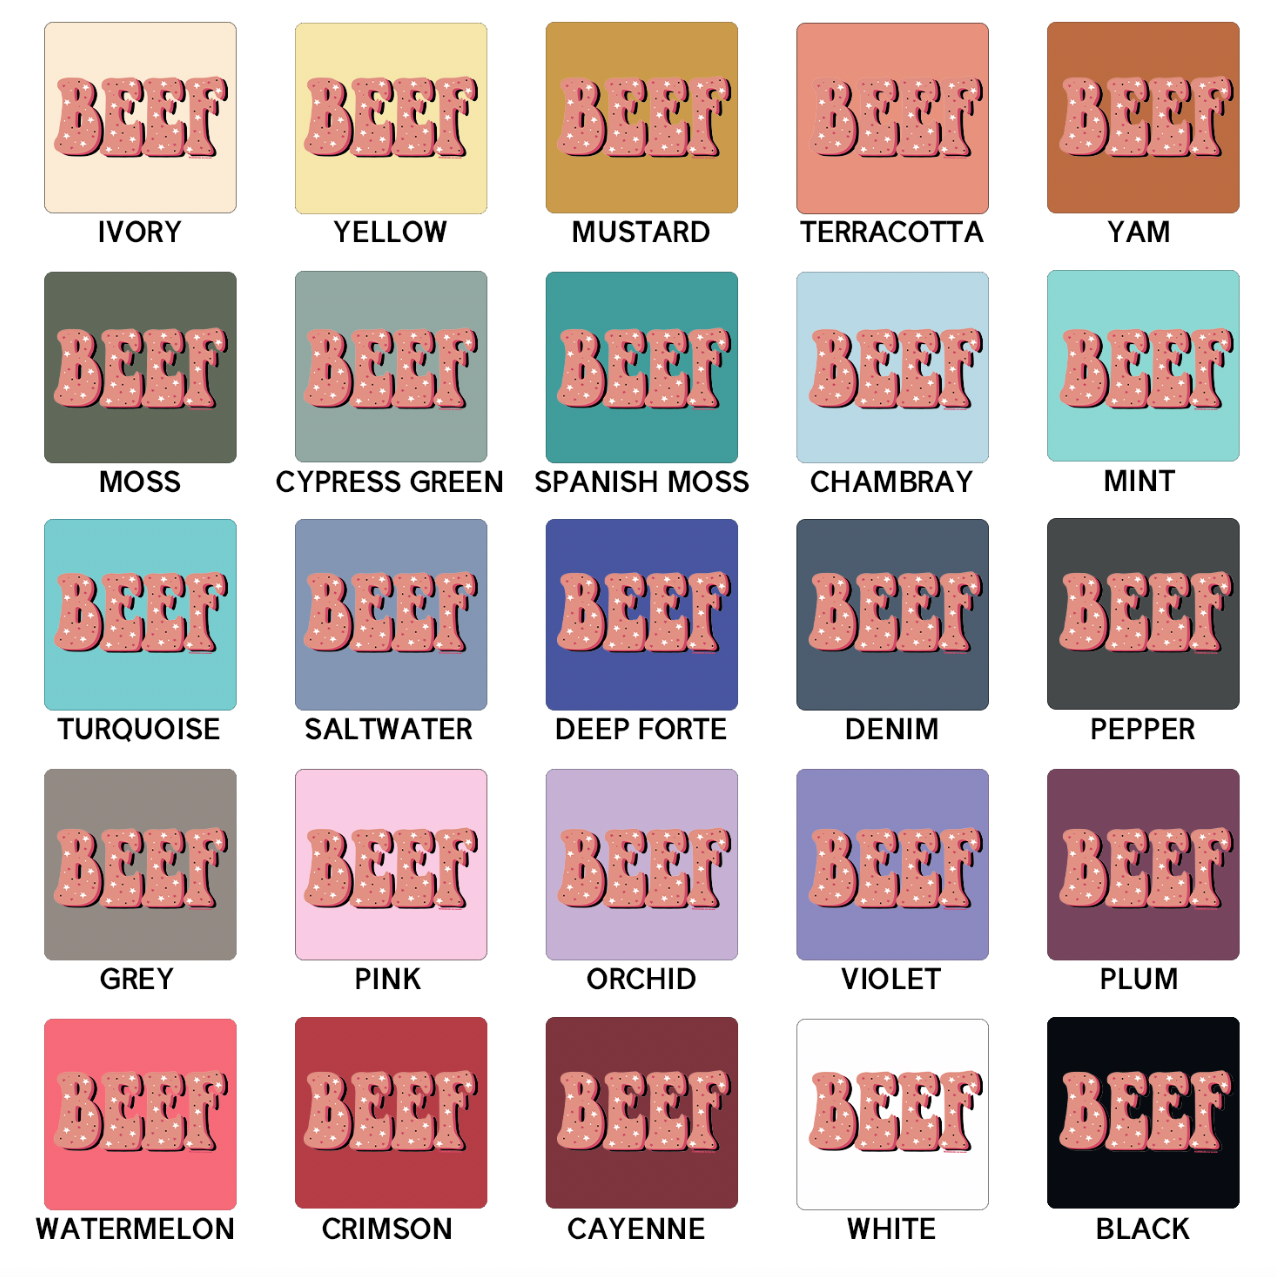 Star Beef ComfortWash/ComfortColor T-Shirt (S-4XL) - Multiple Colors!